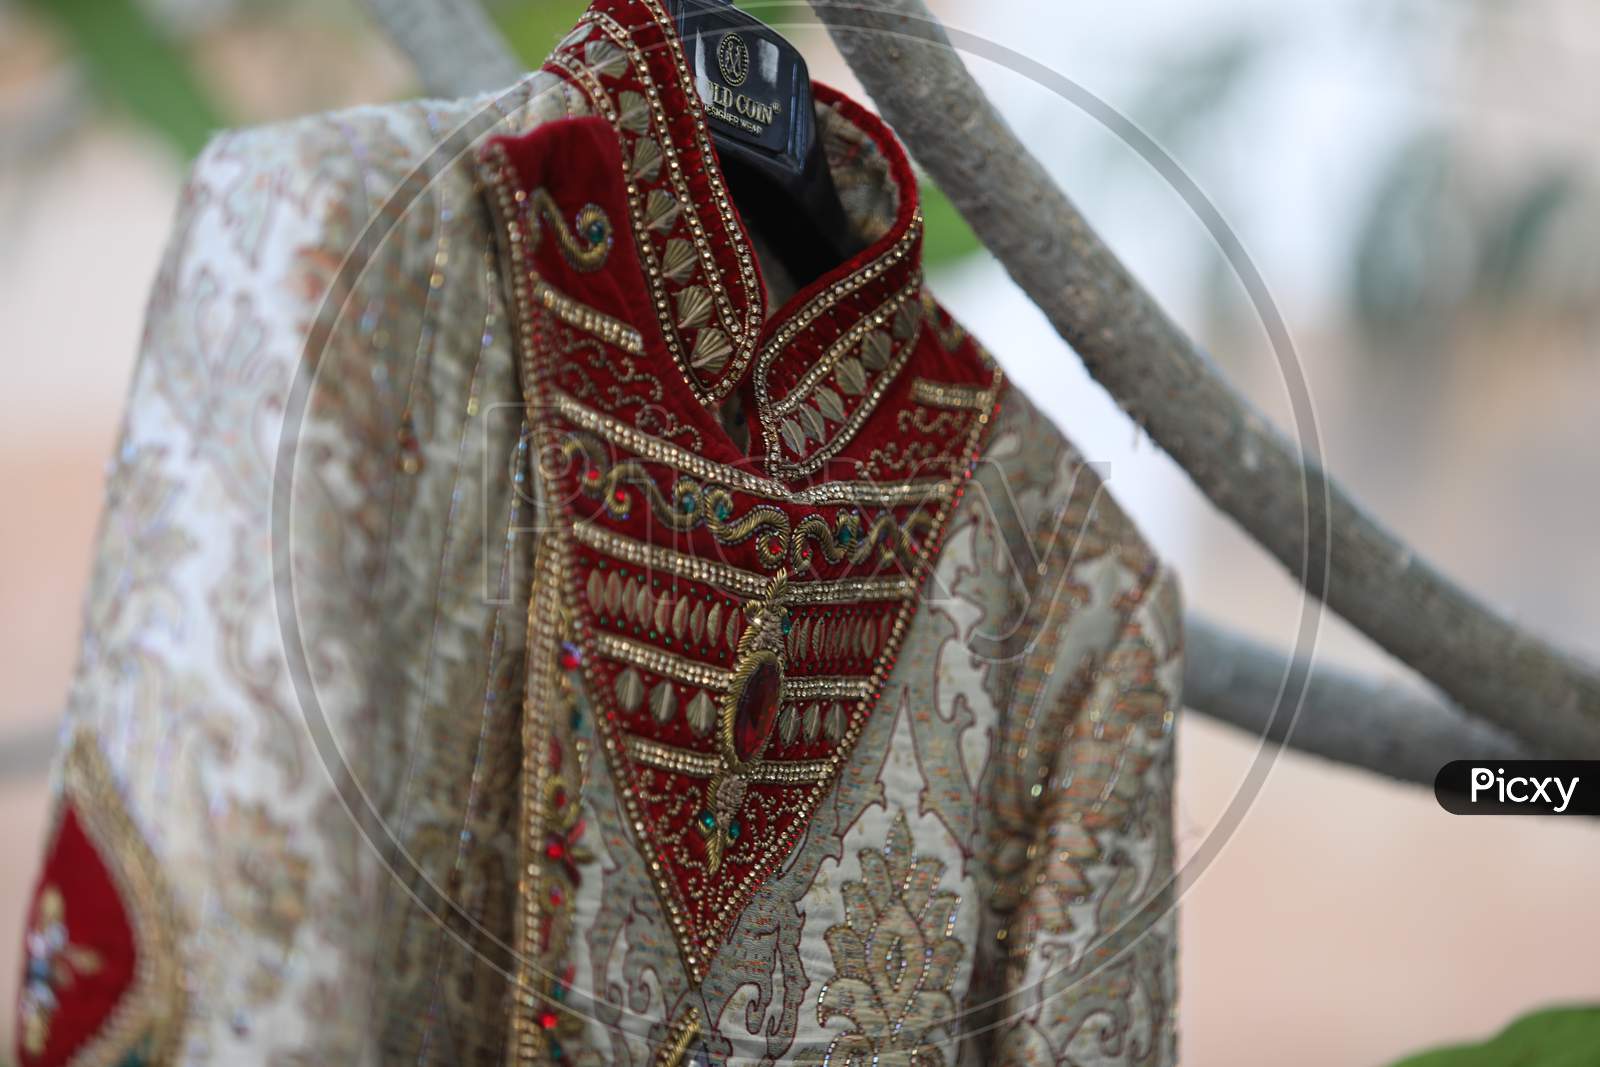 Elegant Dress of Bride At an Indian Wedding